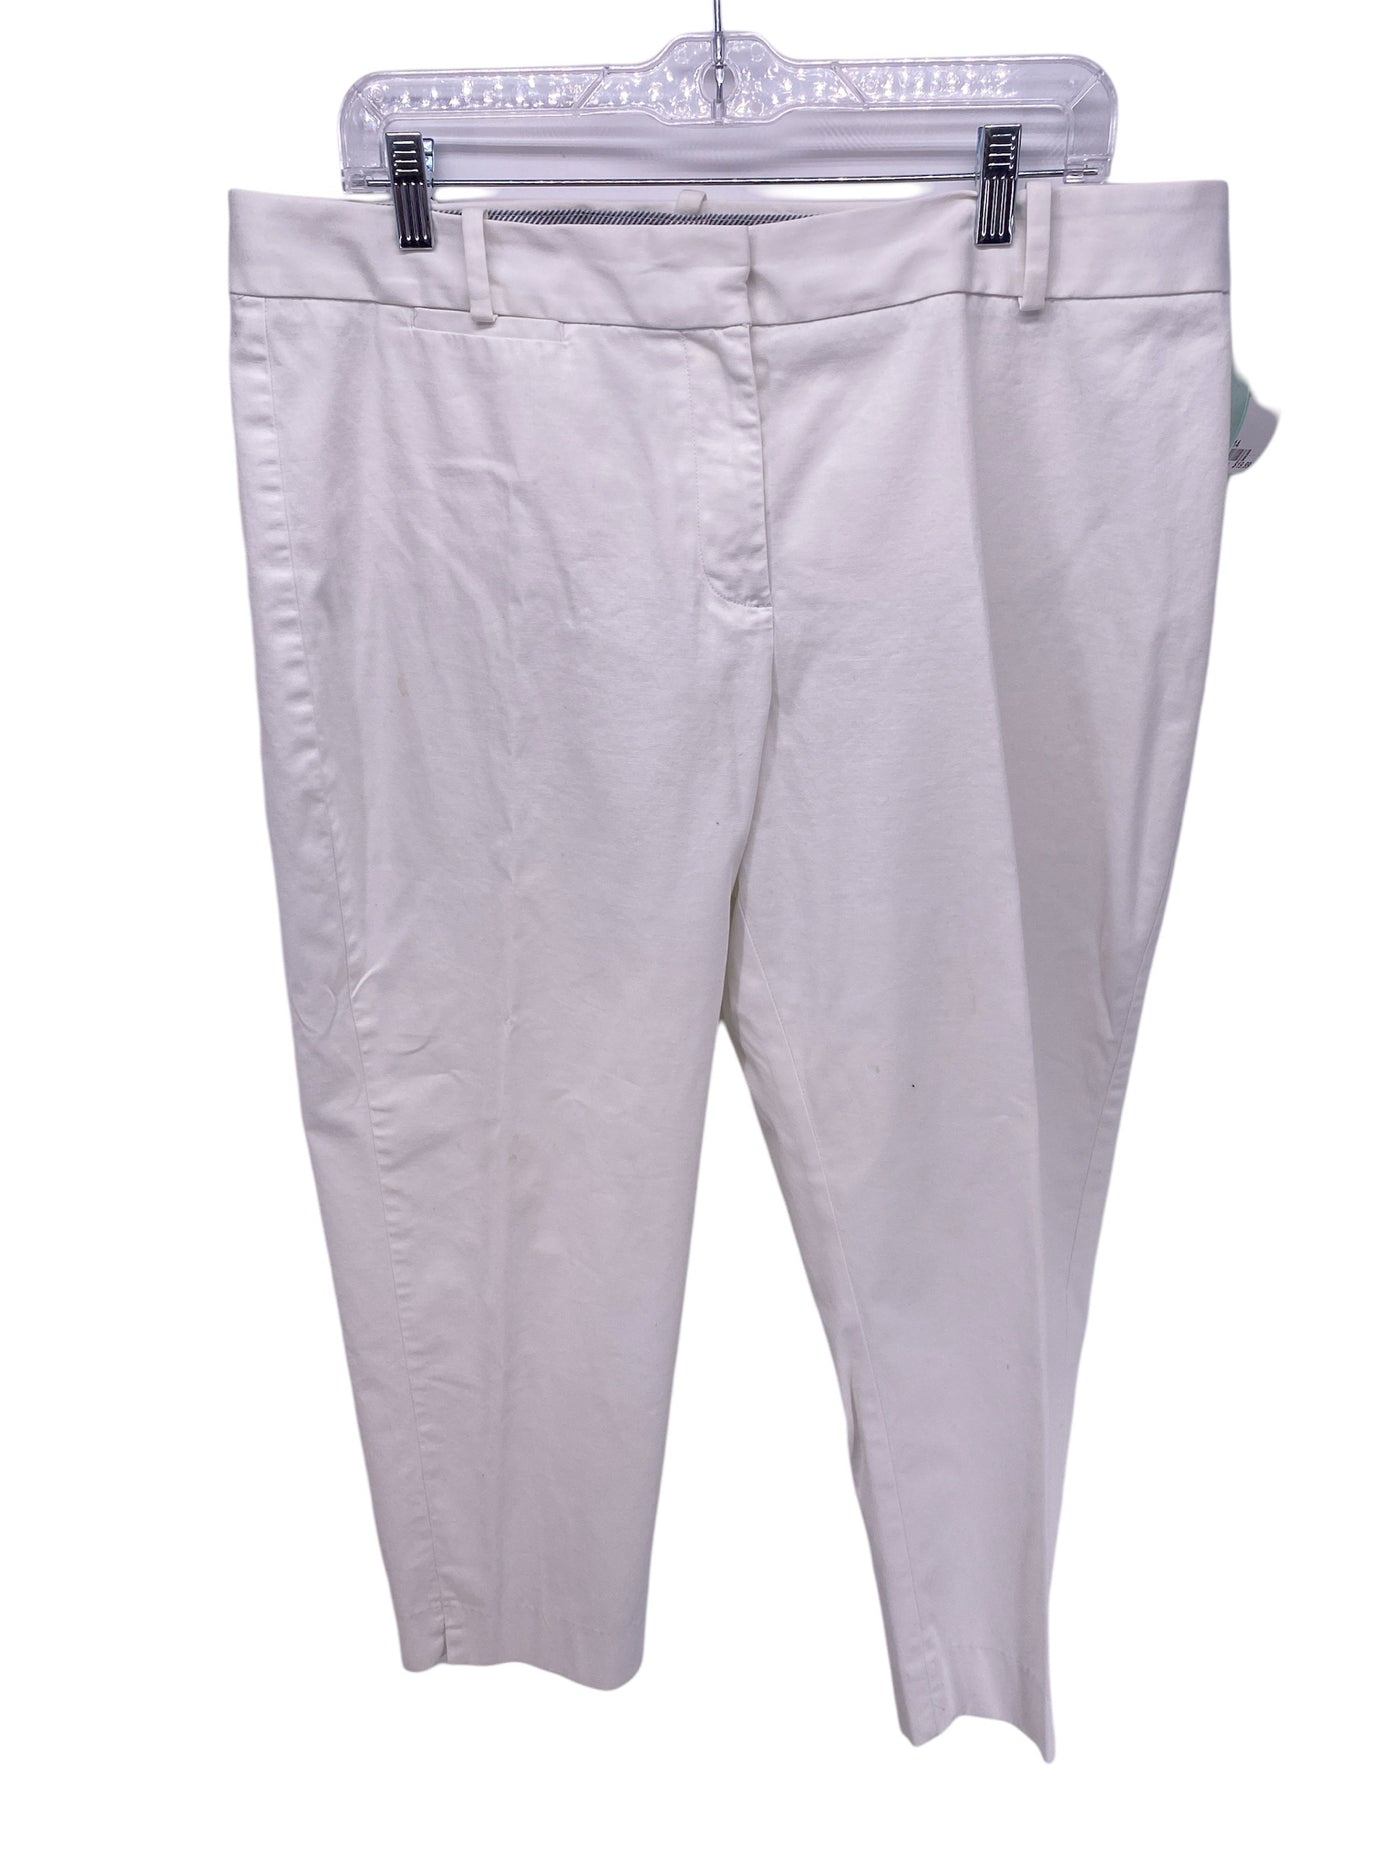 Talbots Misses Size 14 White Pants